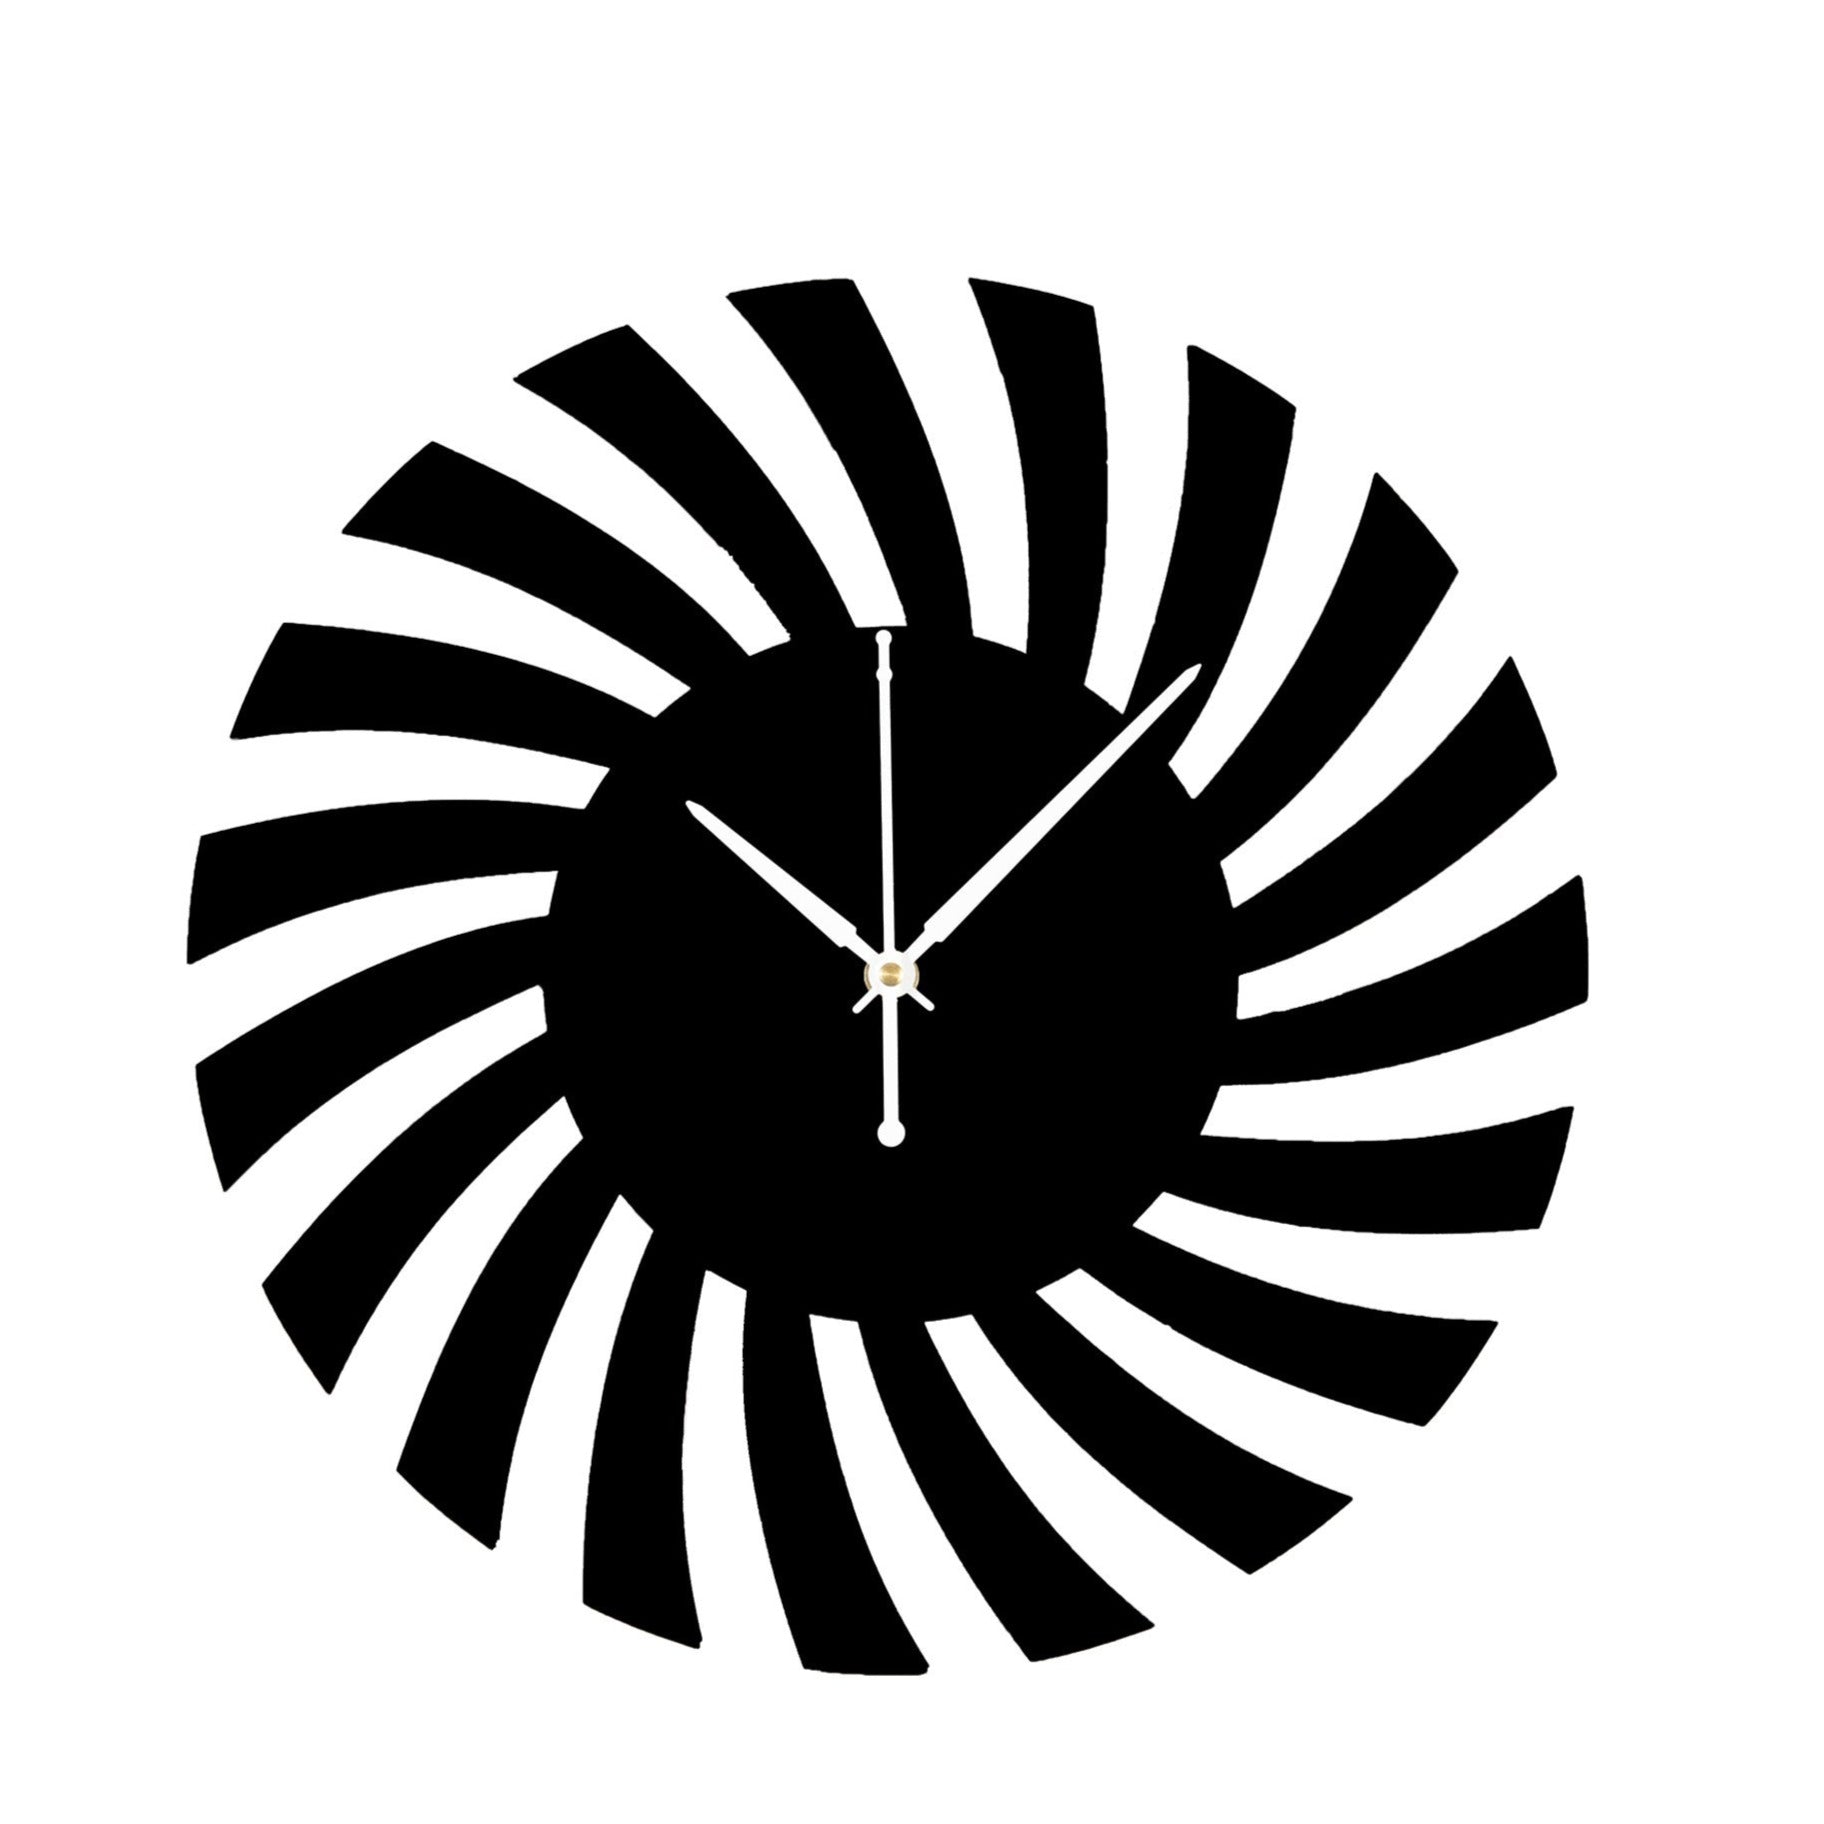 Spiral - Wall Clock